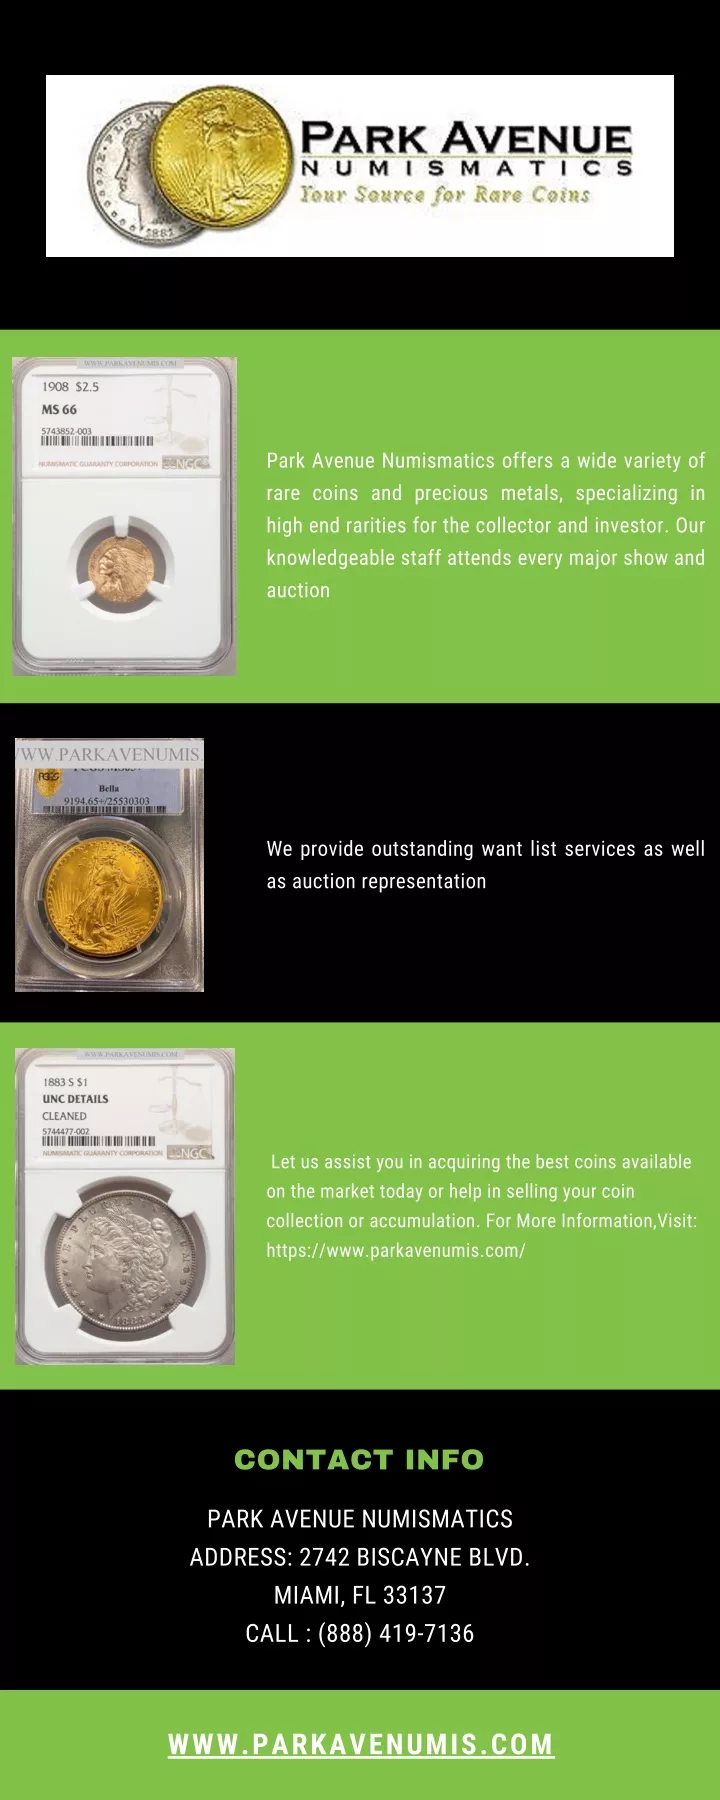 park avenue numismatics offers a wide variety